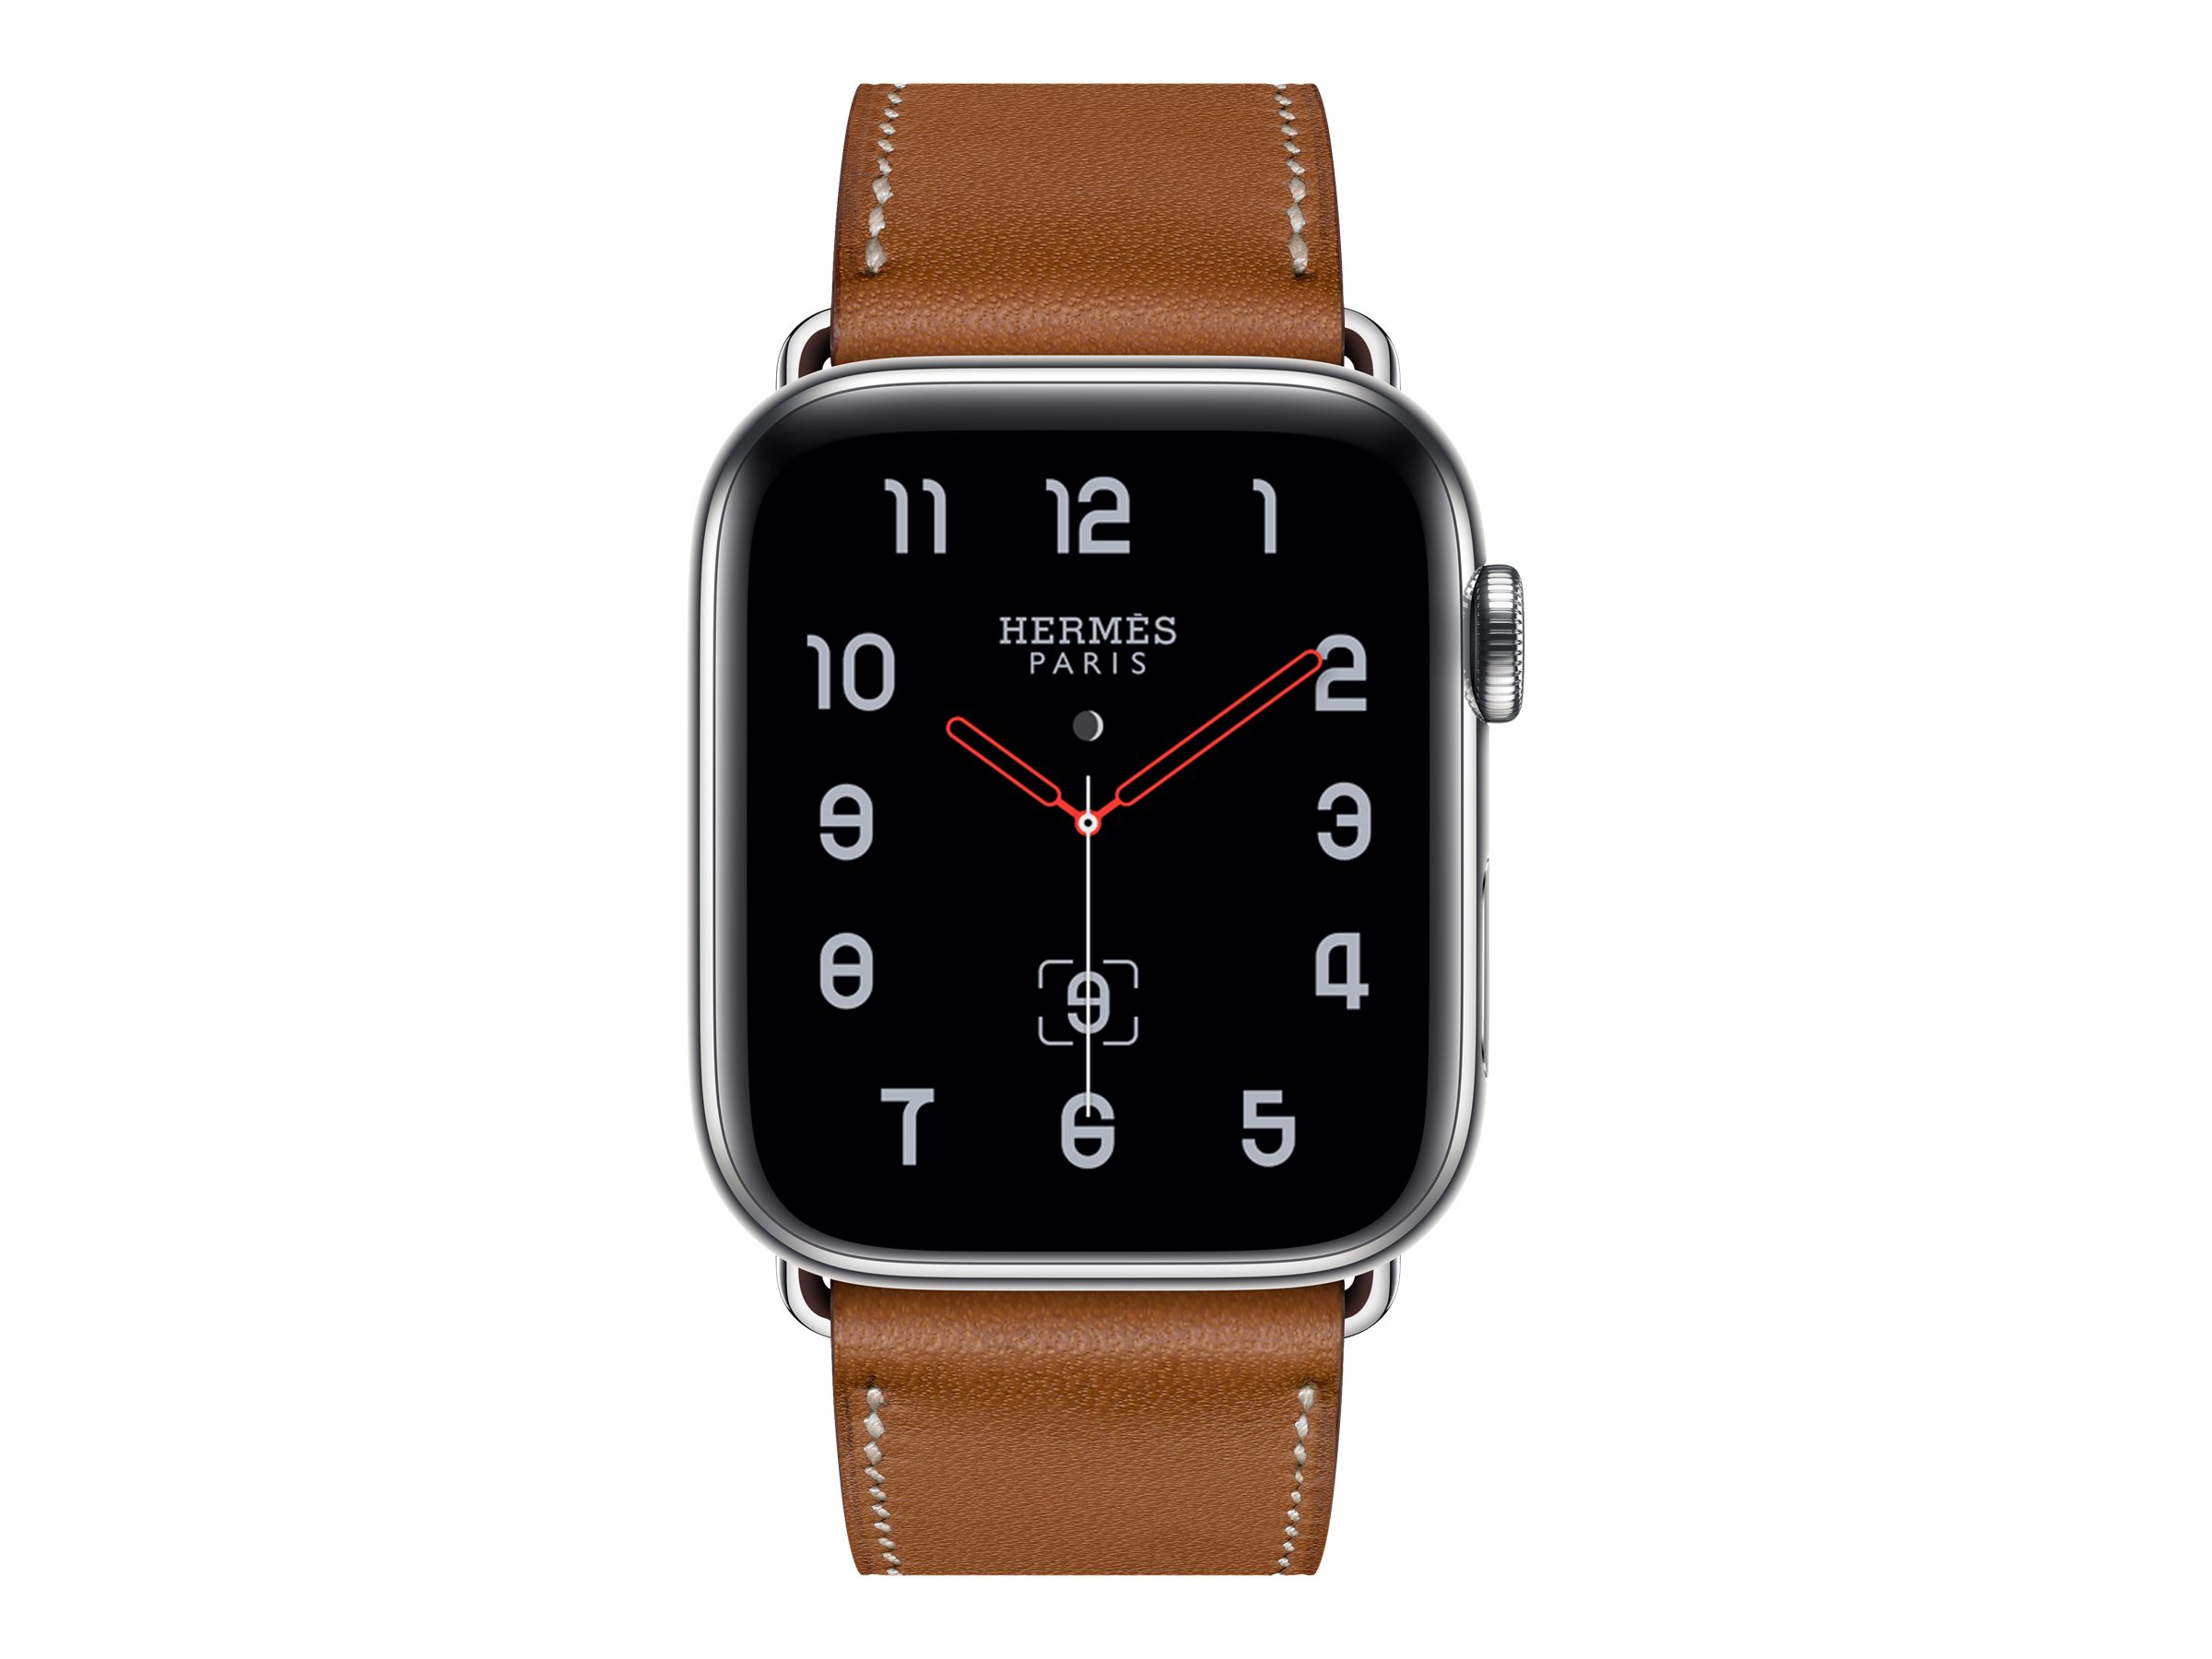 Apple Watch Hermès Series 4 (GPS + Cellular) - full specs, details 